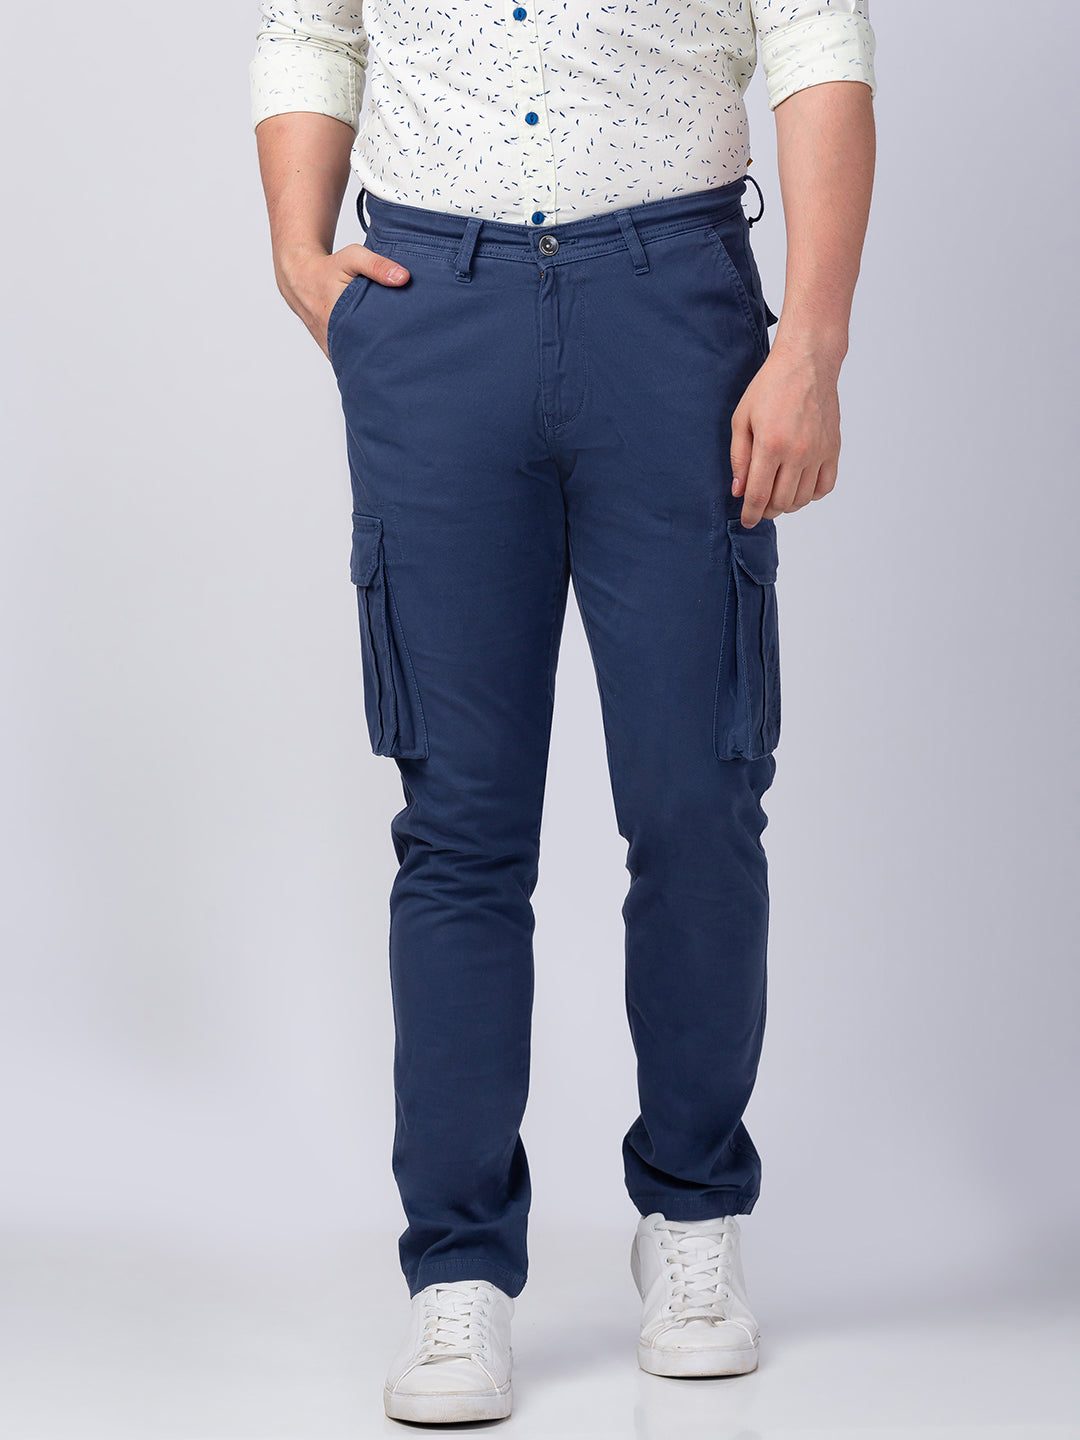 Navy Blue Cargo Pants - Red Kap, Cintas, Unifirst Dickies etc- Used Work  Uniform | eBay